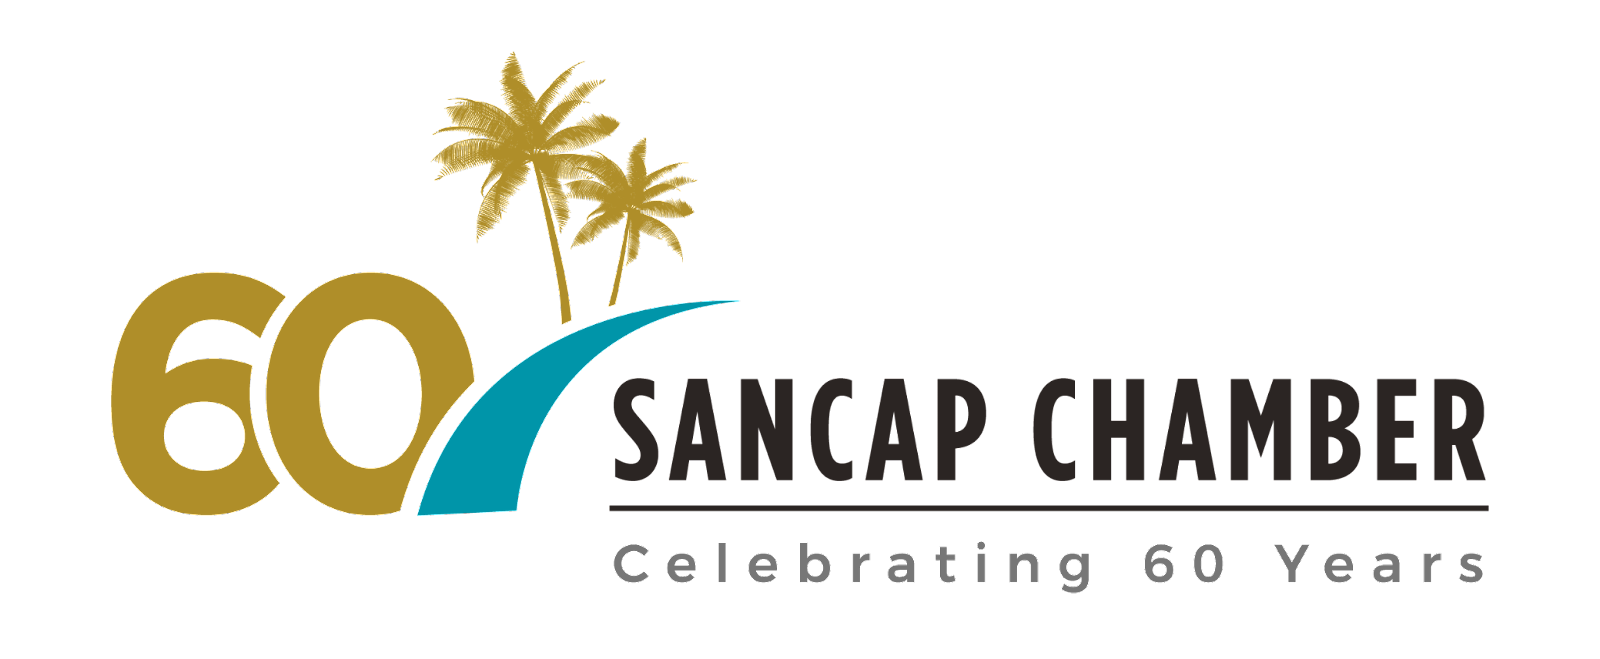 60th Anniversary SanCap Chamber